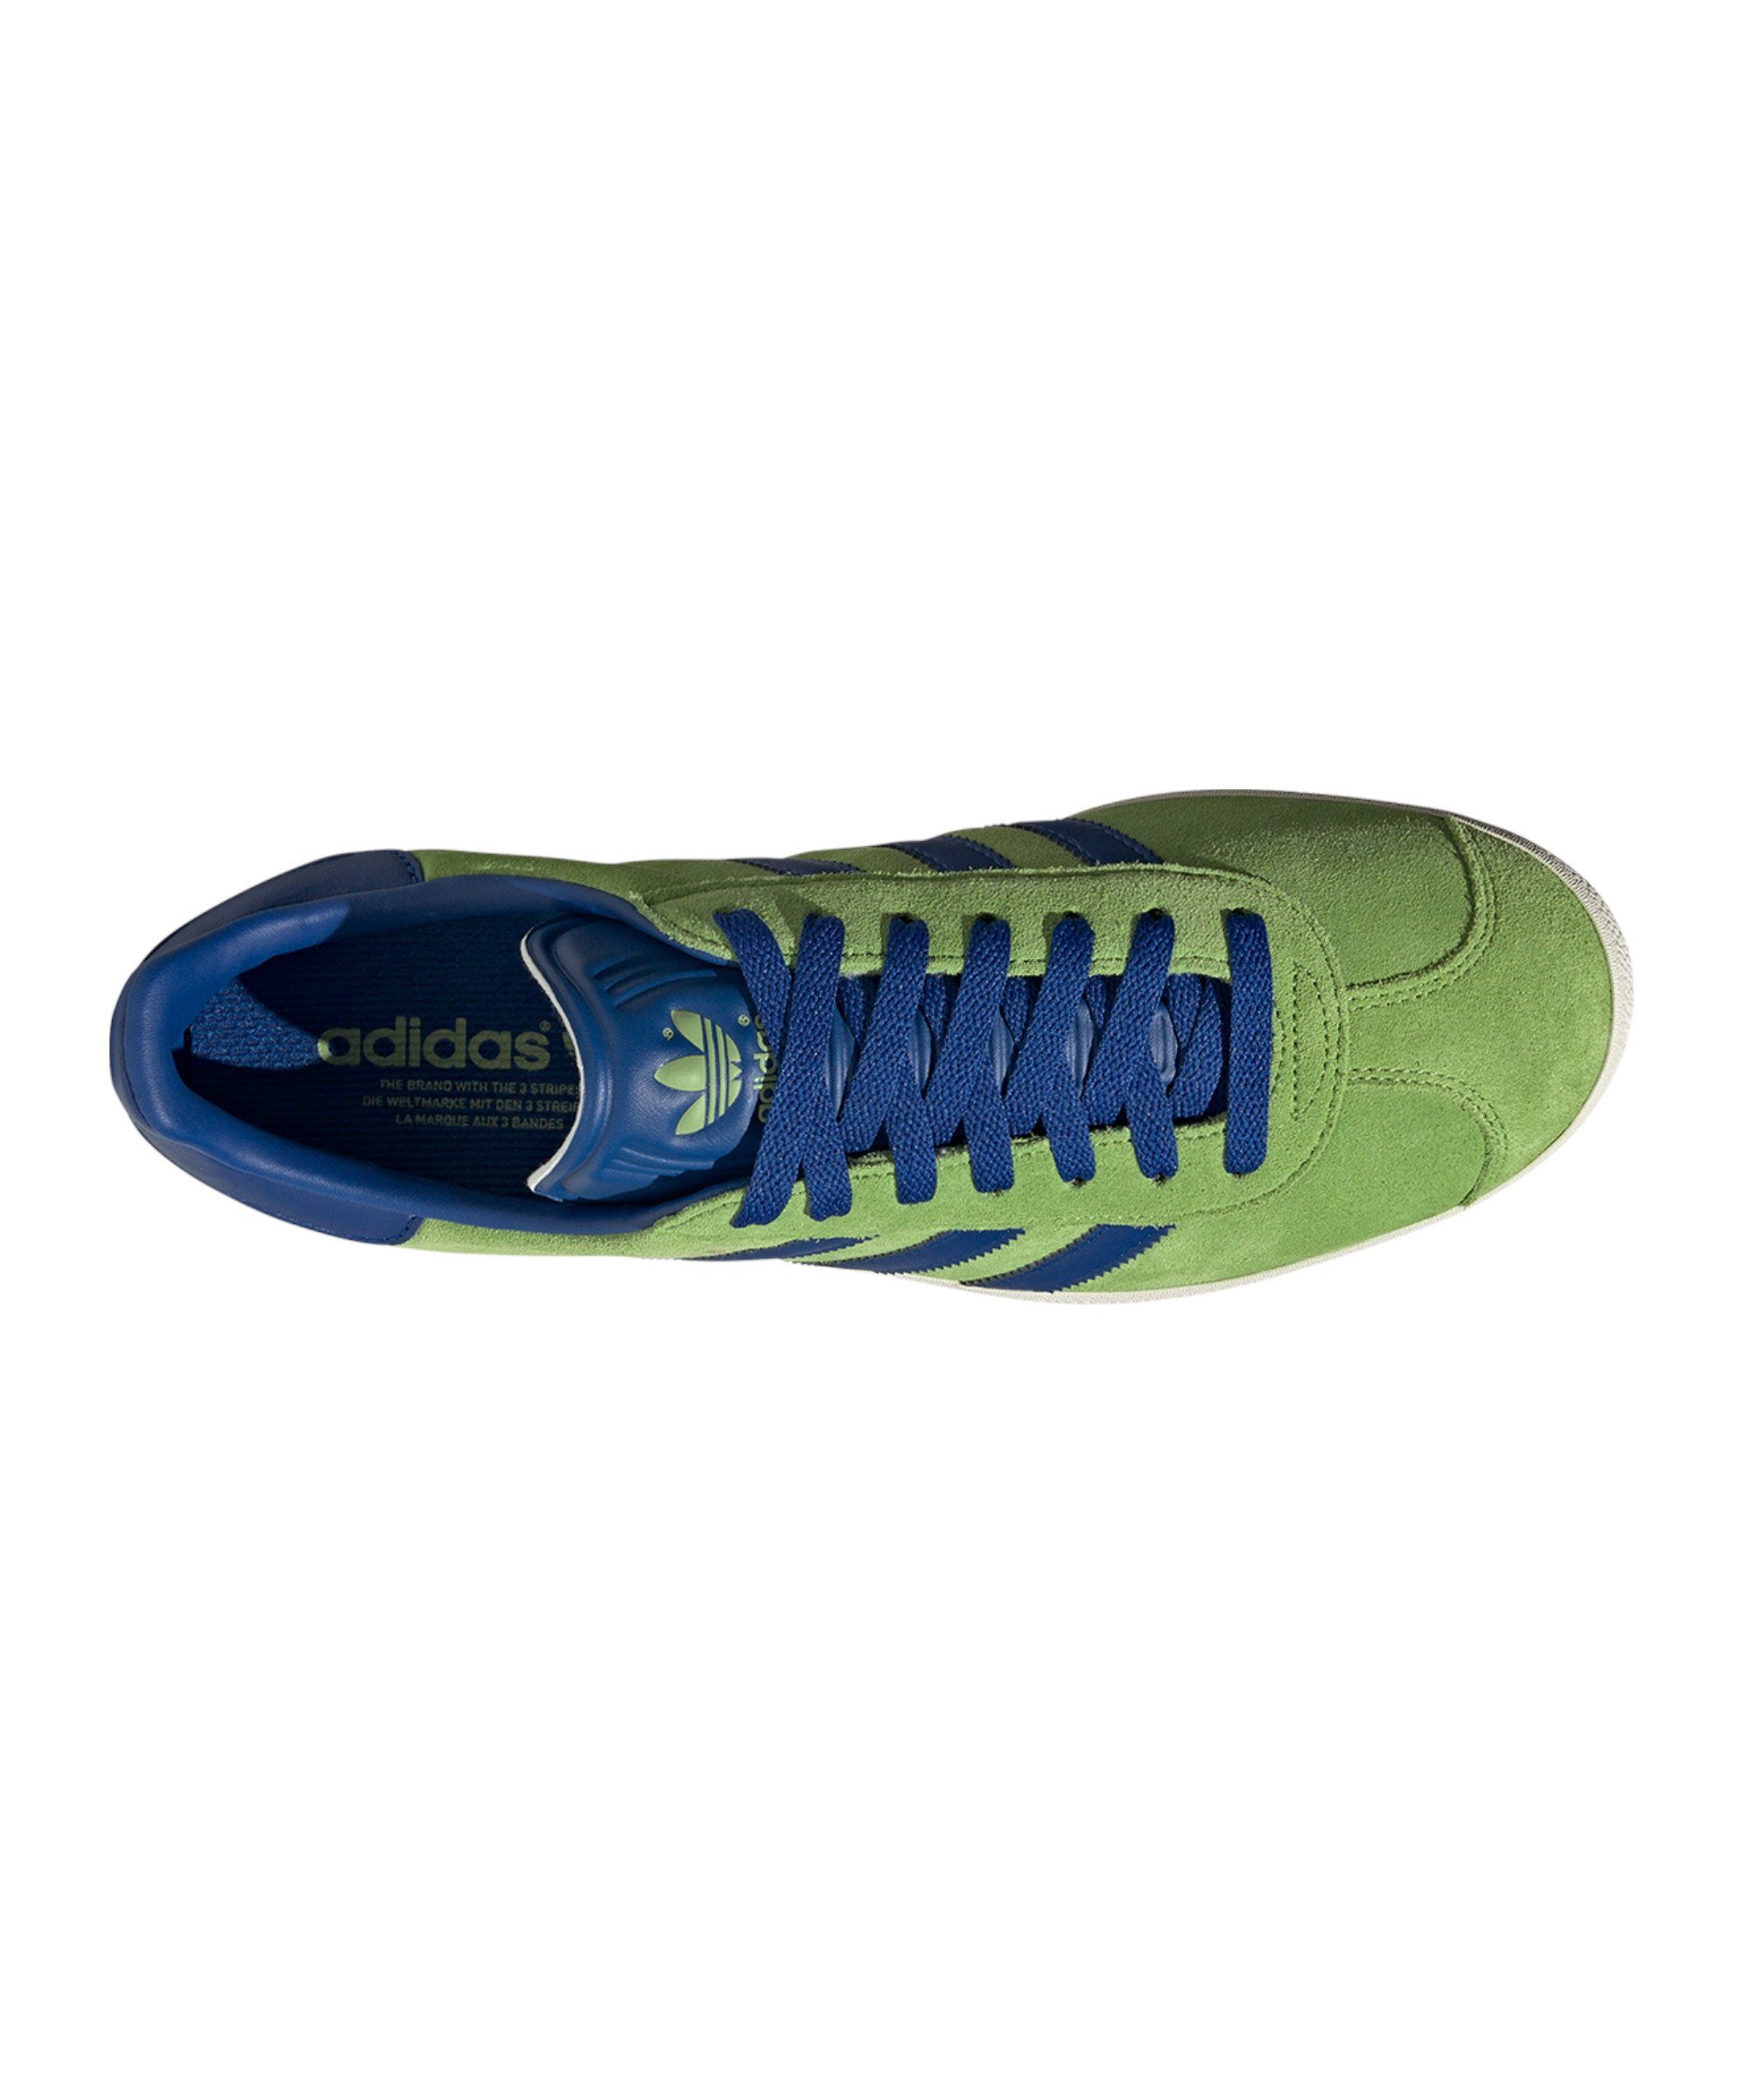 adidas Originals Gazelle gruenblauweiss Sneaker